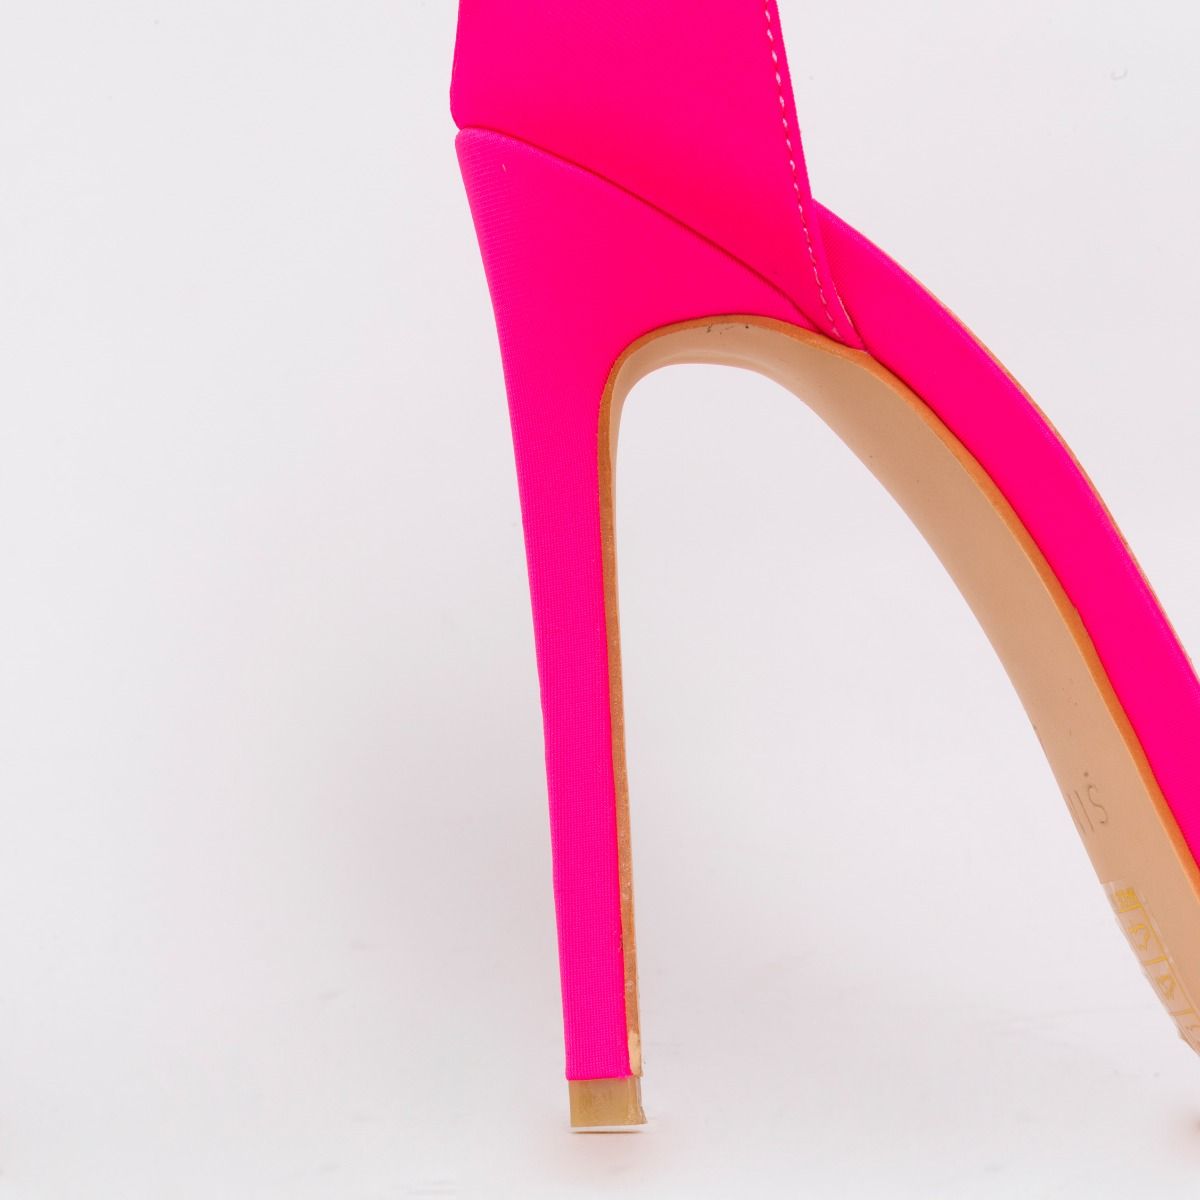 light pink heels wide fit